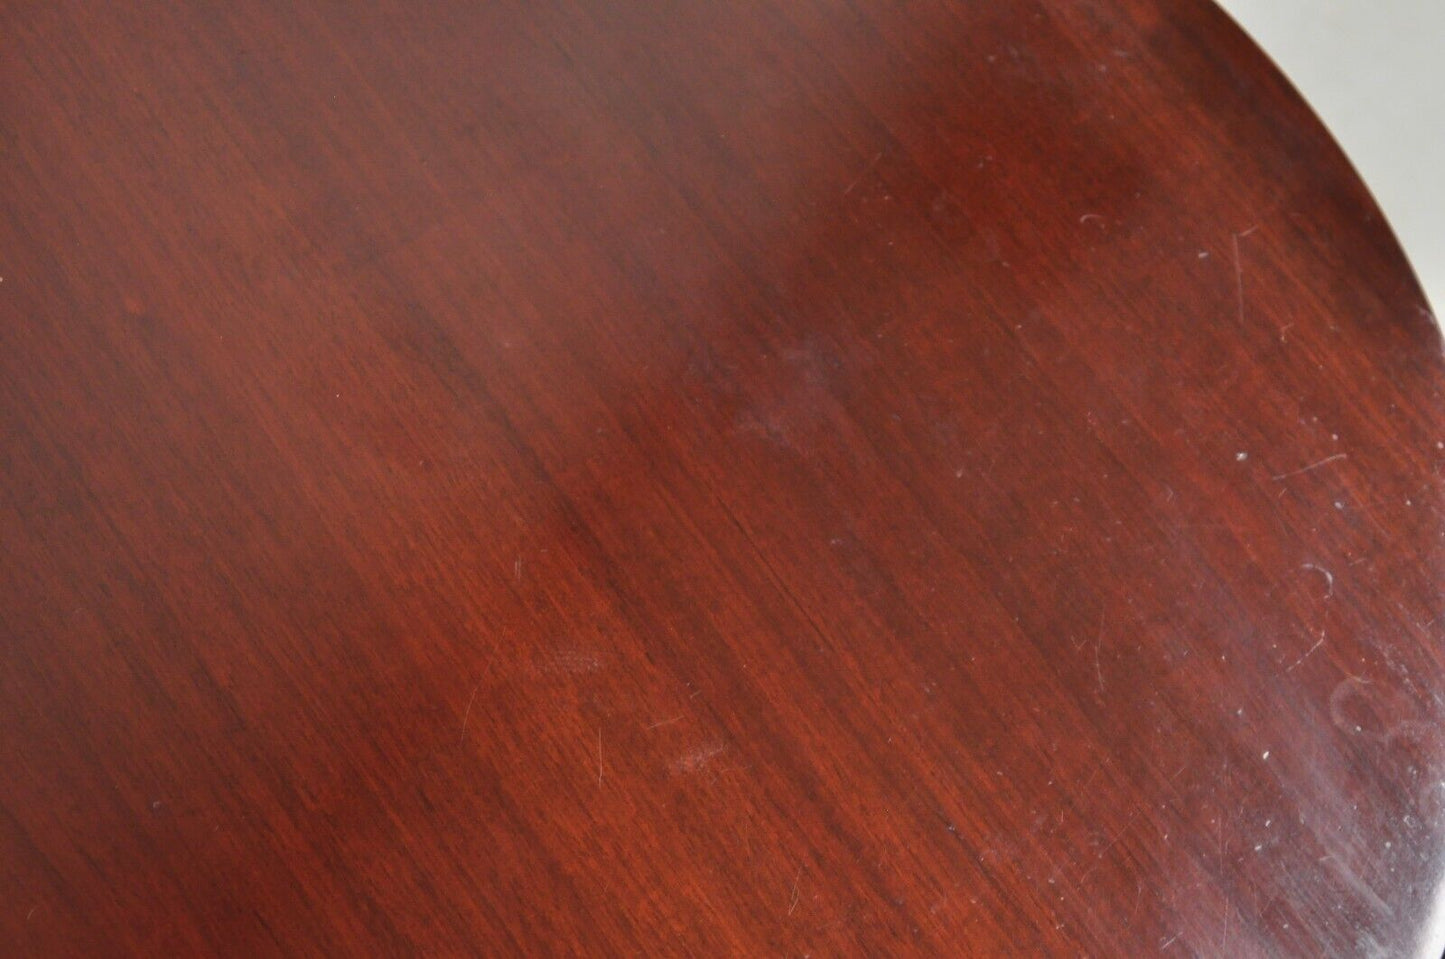 Vintage Sheridan Federal Style Mahogany Wood Tilt Top Accent Side Tea Table